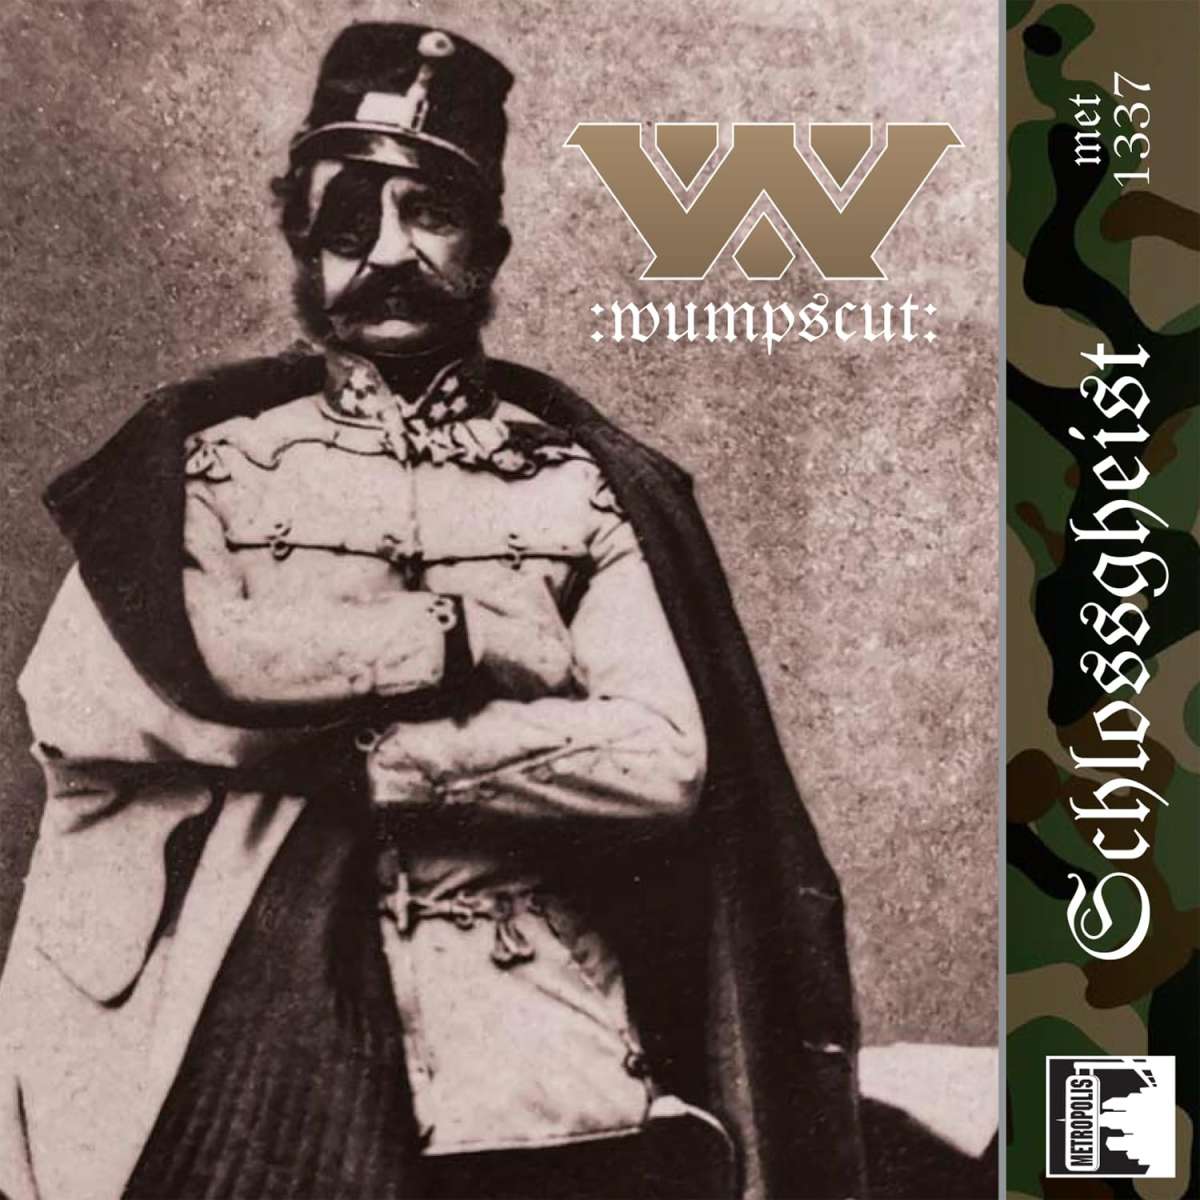 Wumpscut: Single "Tanz den Tod" + Album @ Sonic Seducer